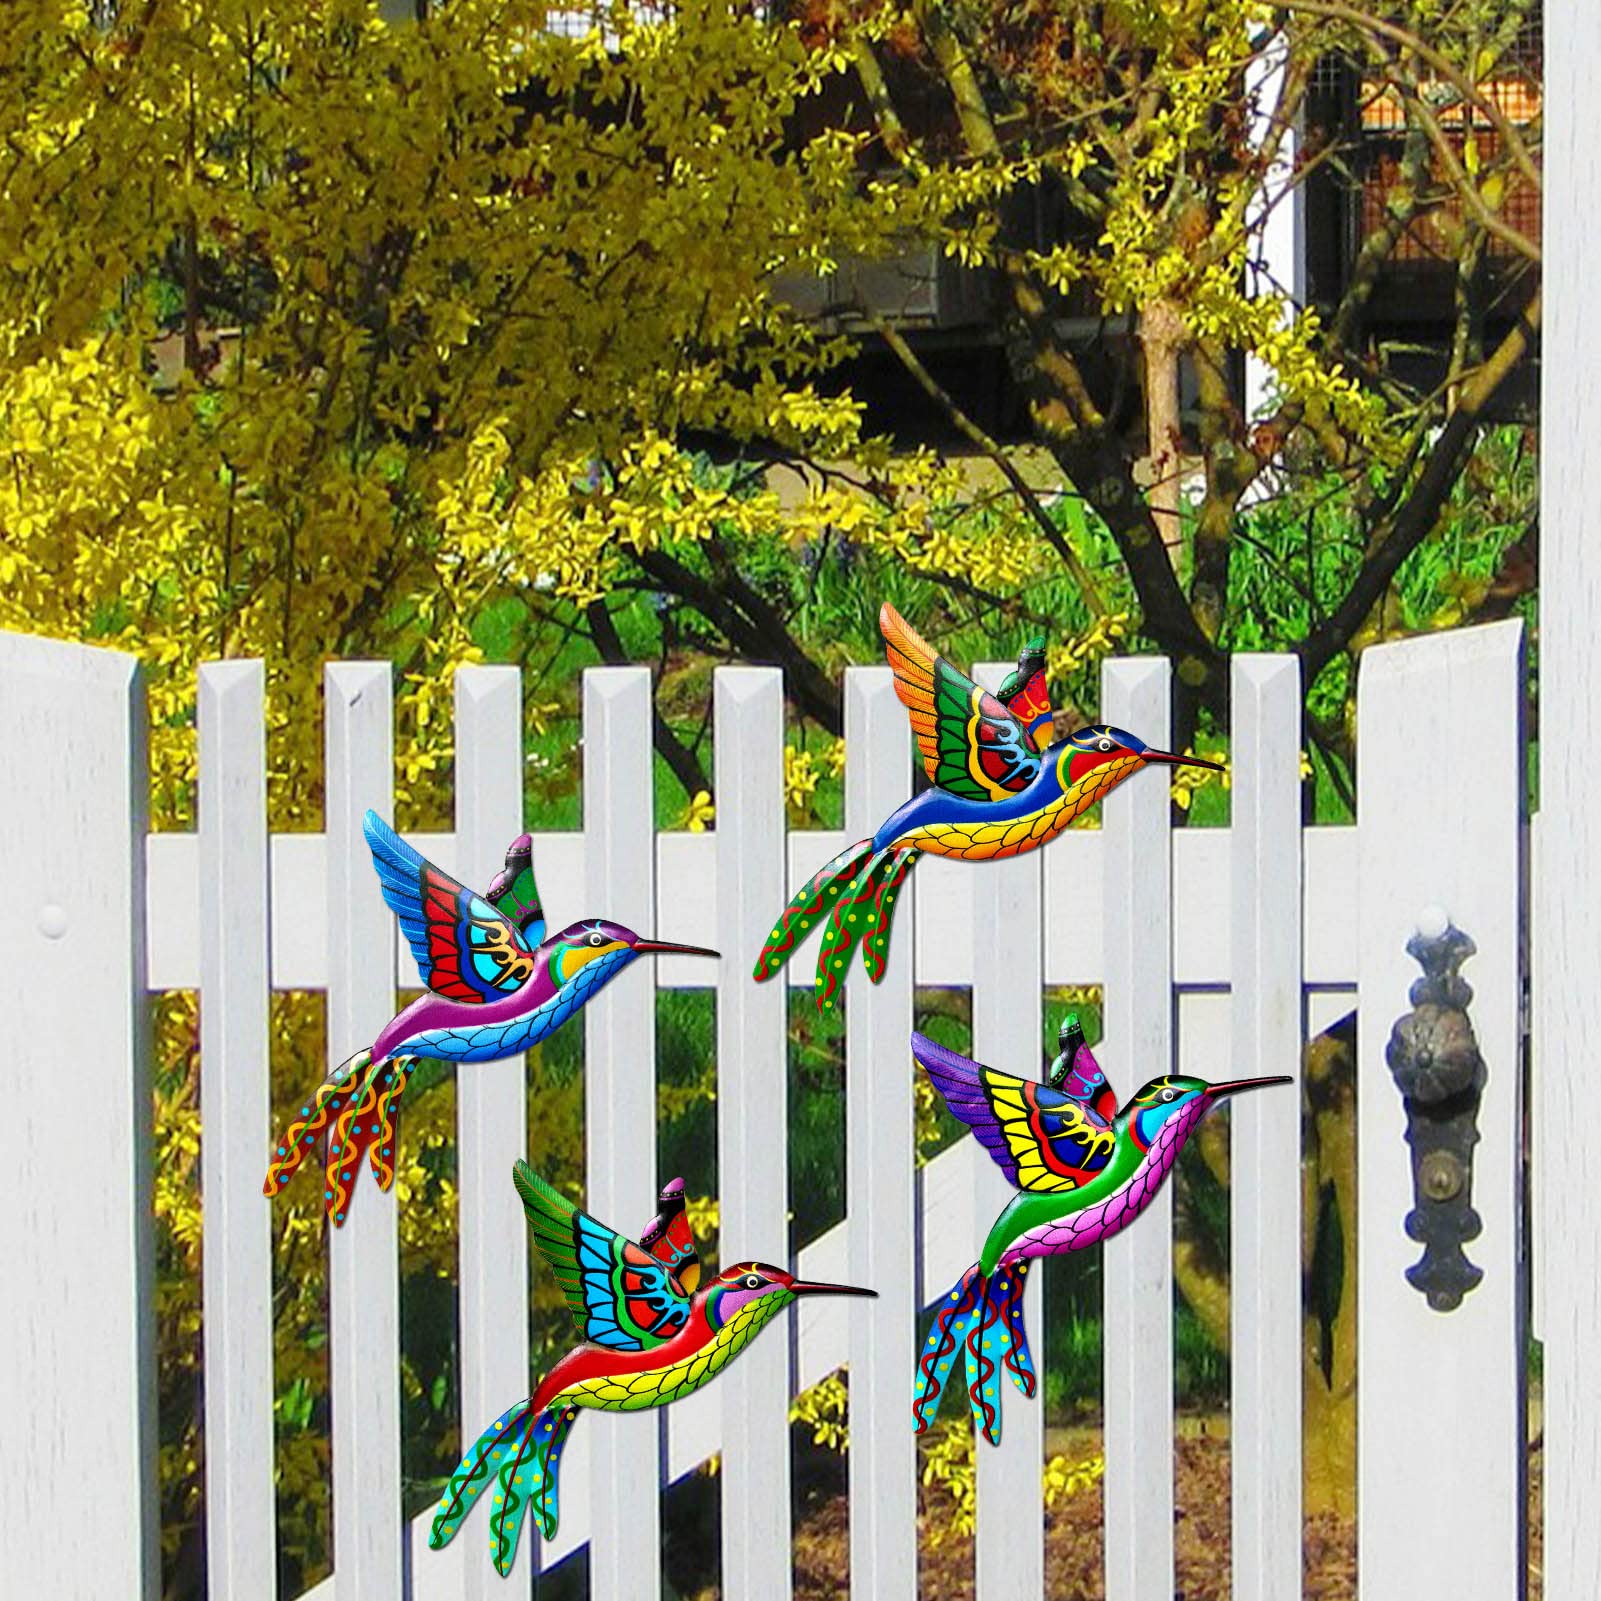 3D Colorful Garden Birds Sculpture Outdoor